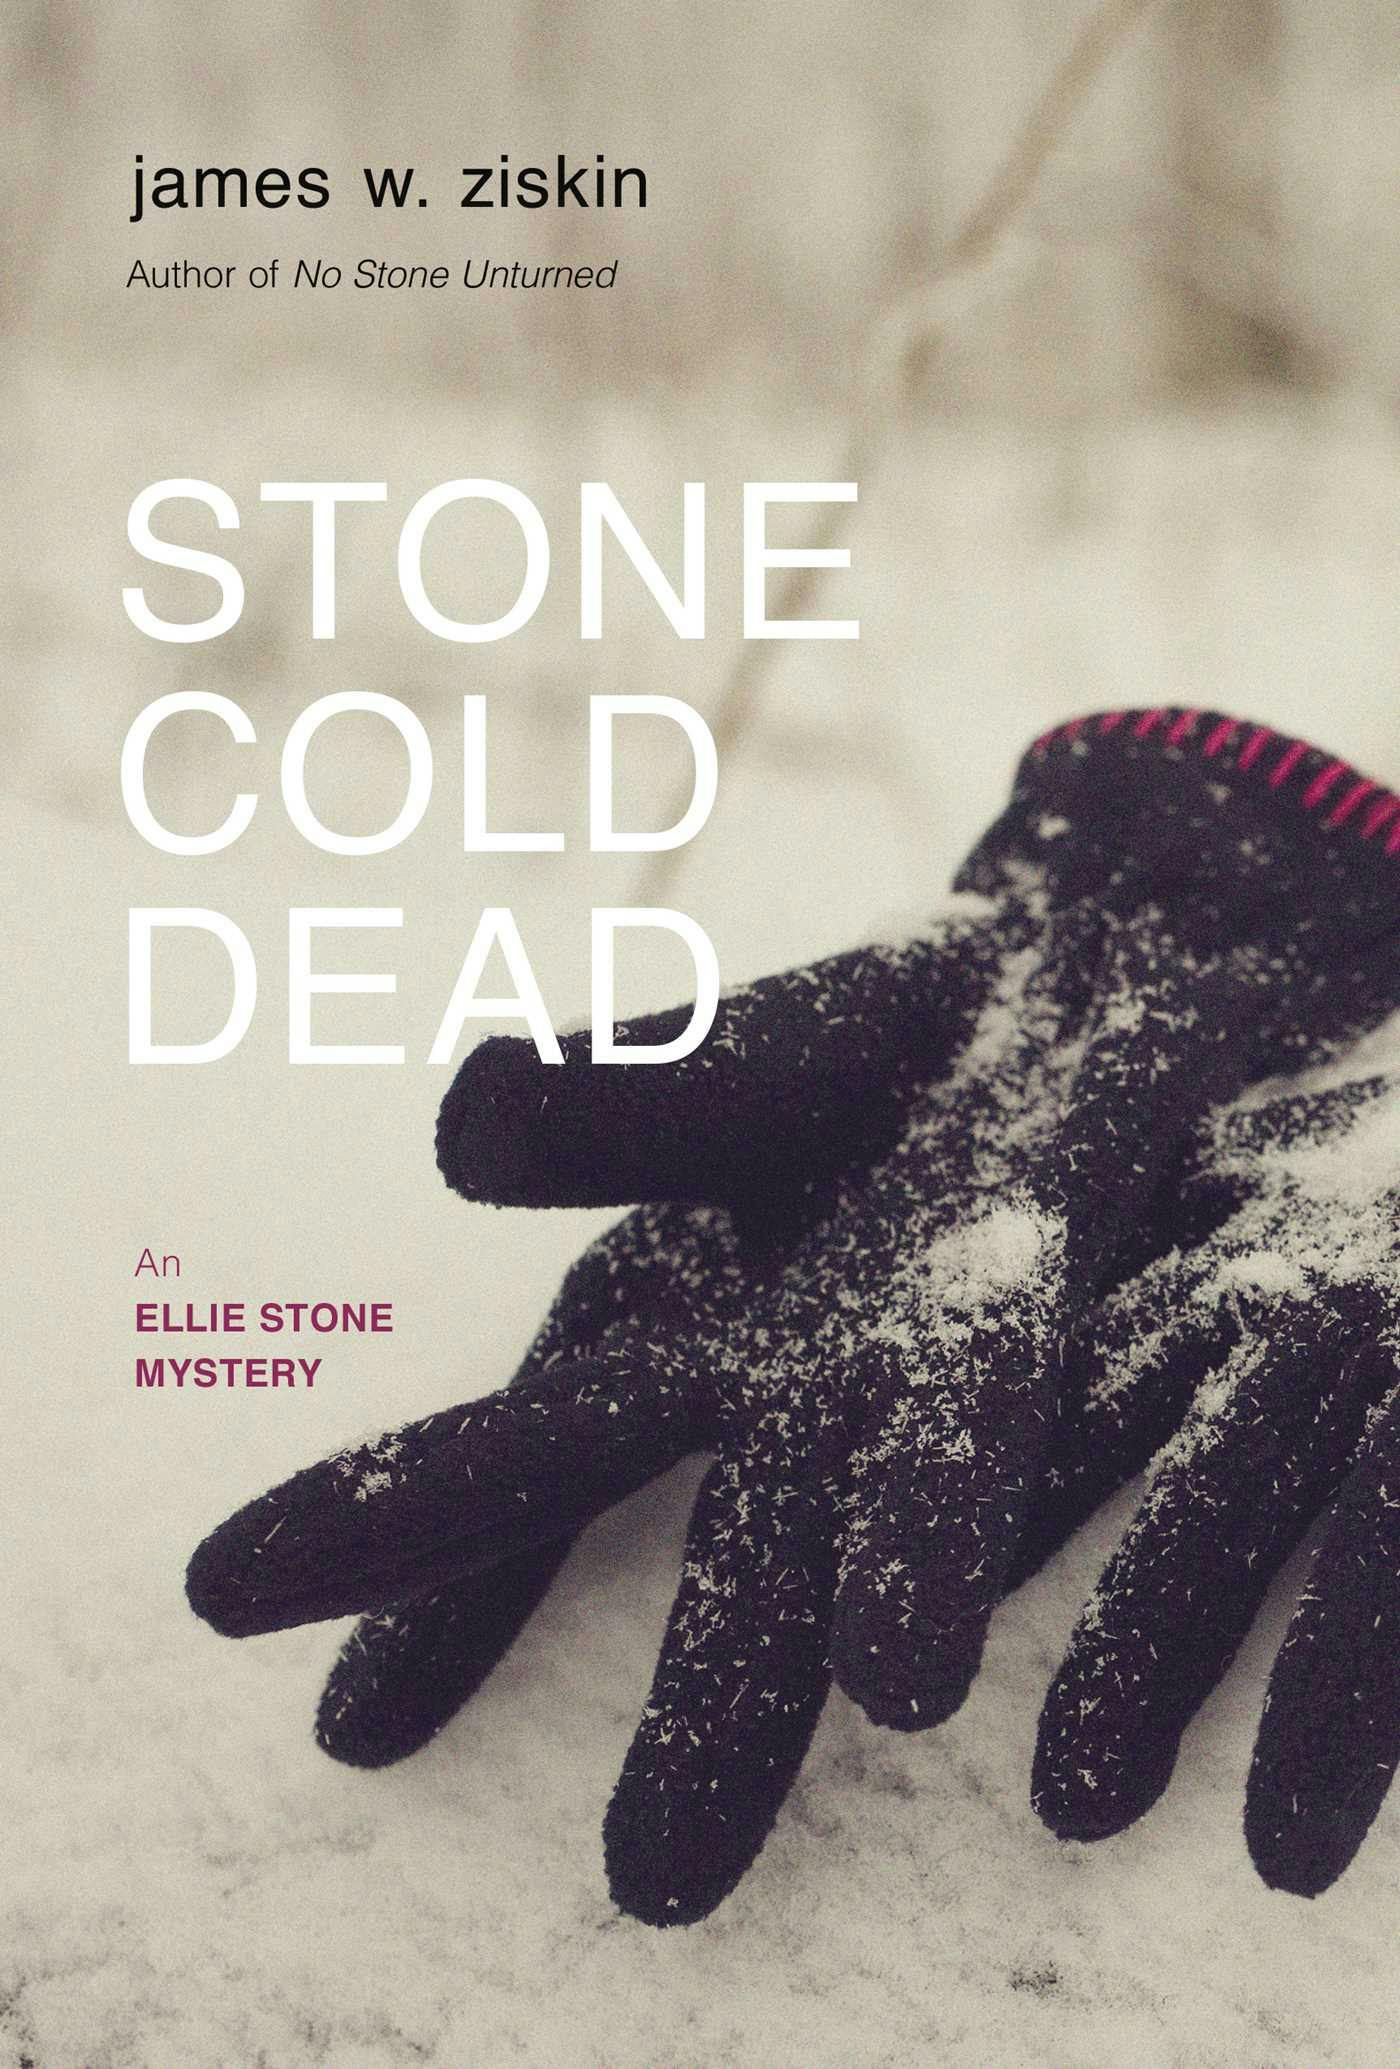 Stone Cold Dead: An Ellie Stone Mystery - James W. Ziskin